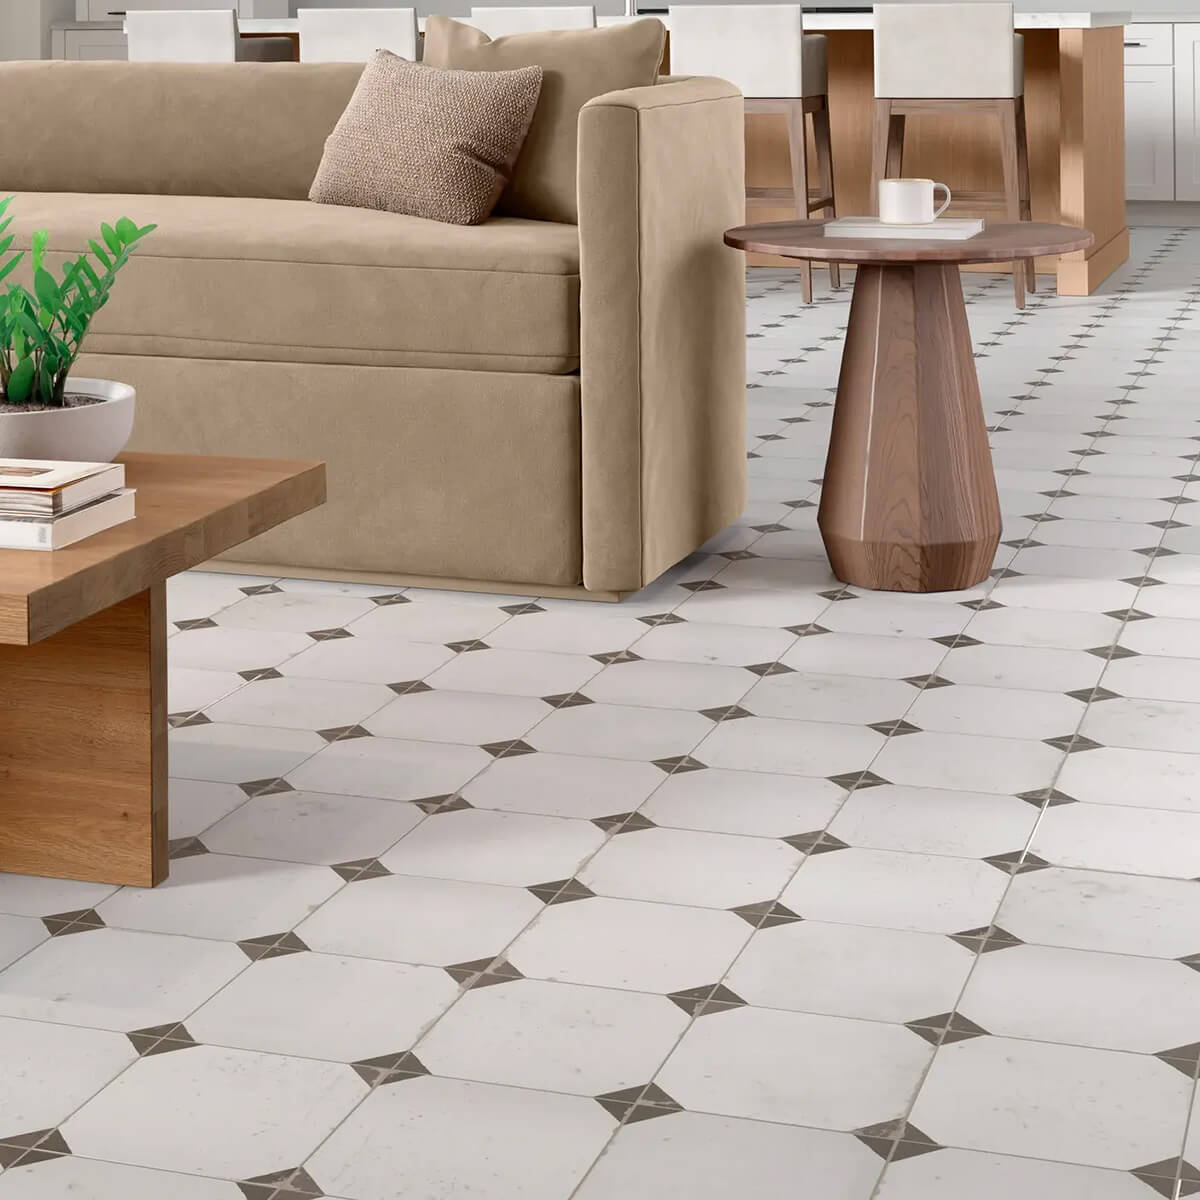 Tile flooring for living area | Rocky Mountain Flooring